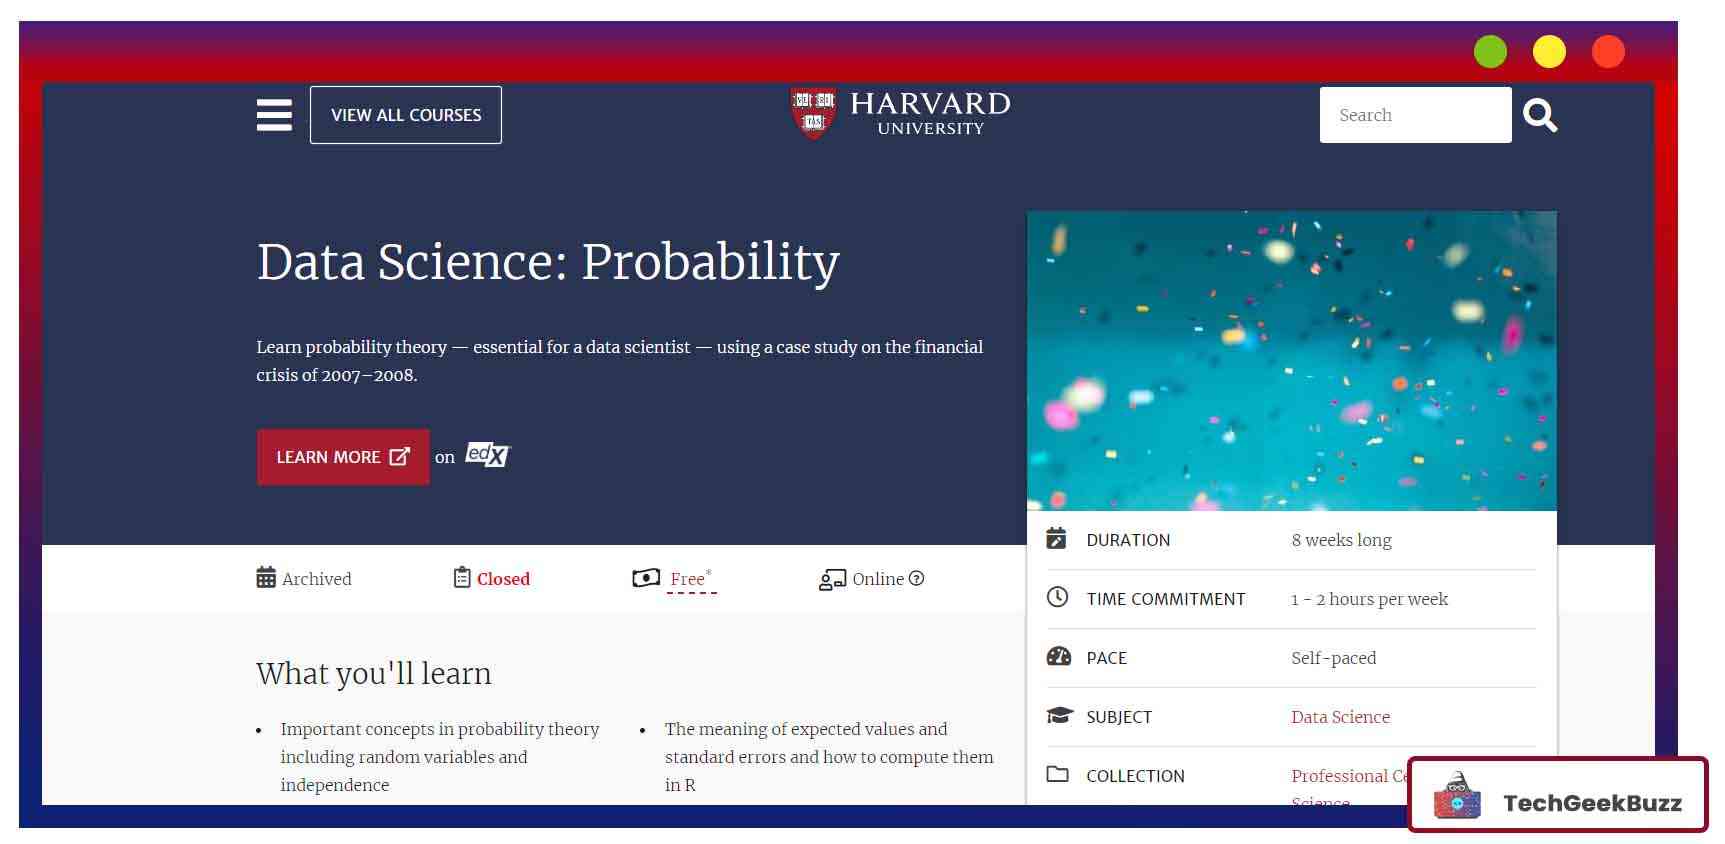 Data Science: Probability